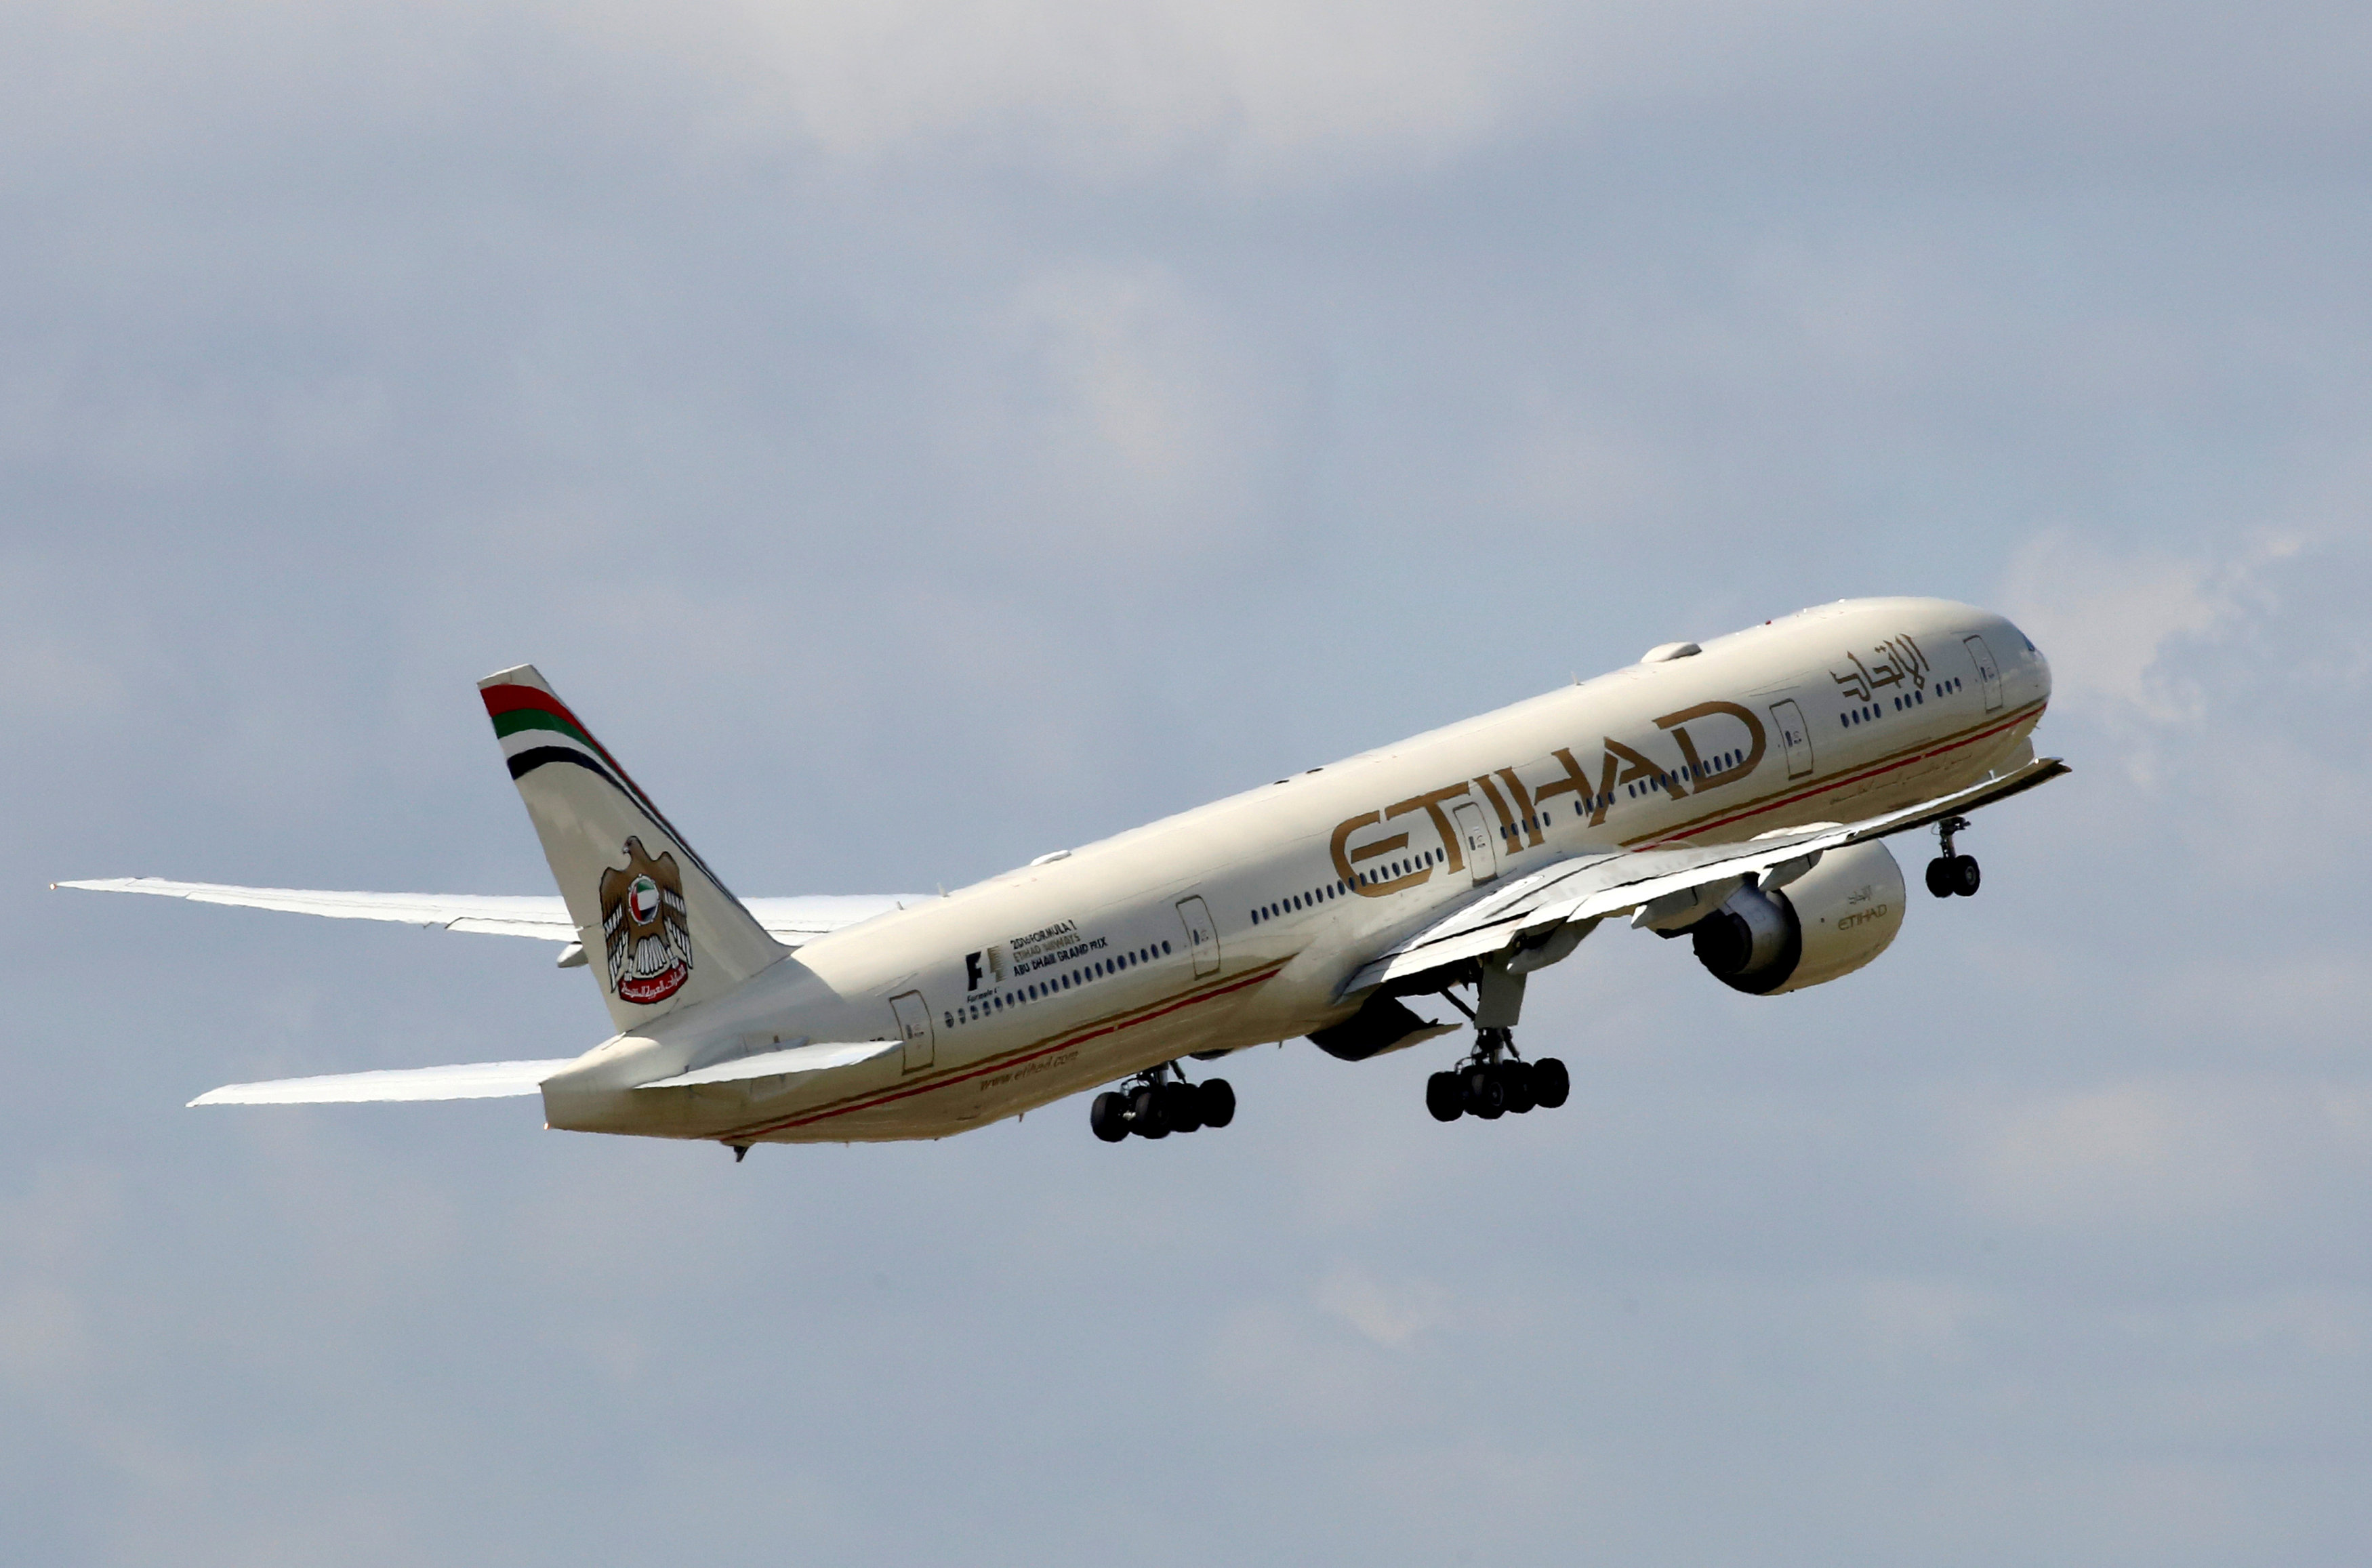 Etihad Airways assisting Australian police with plane attack probe